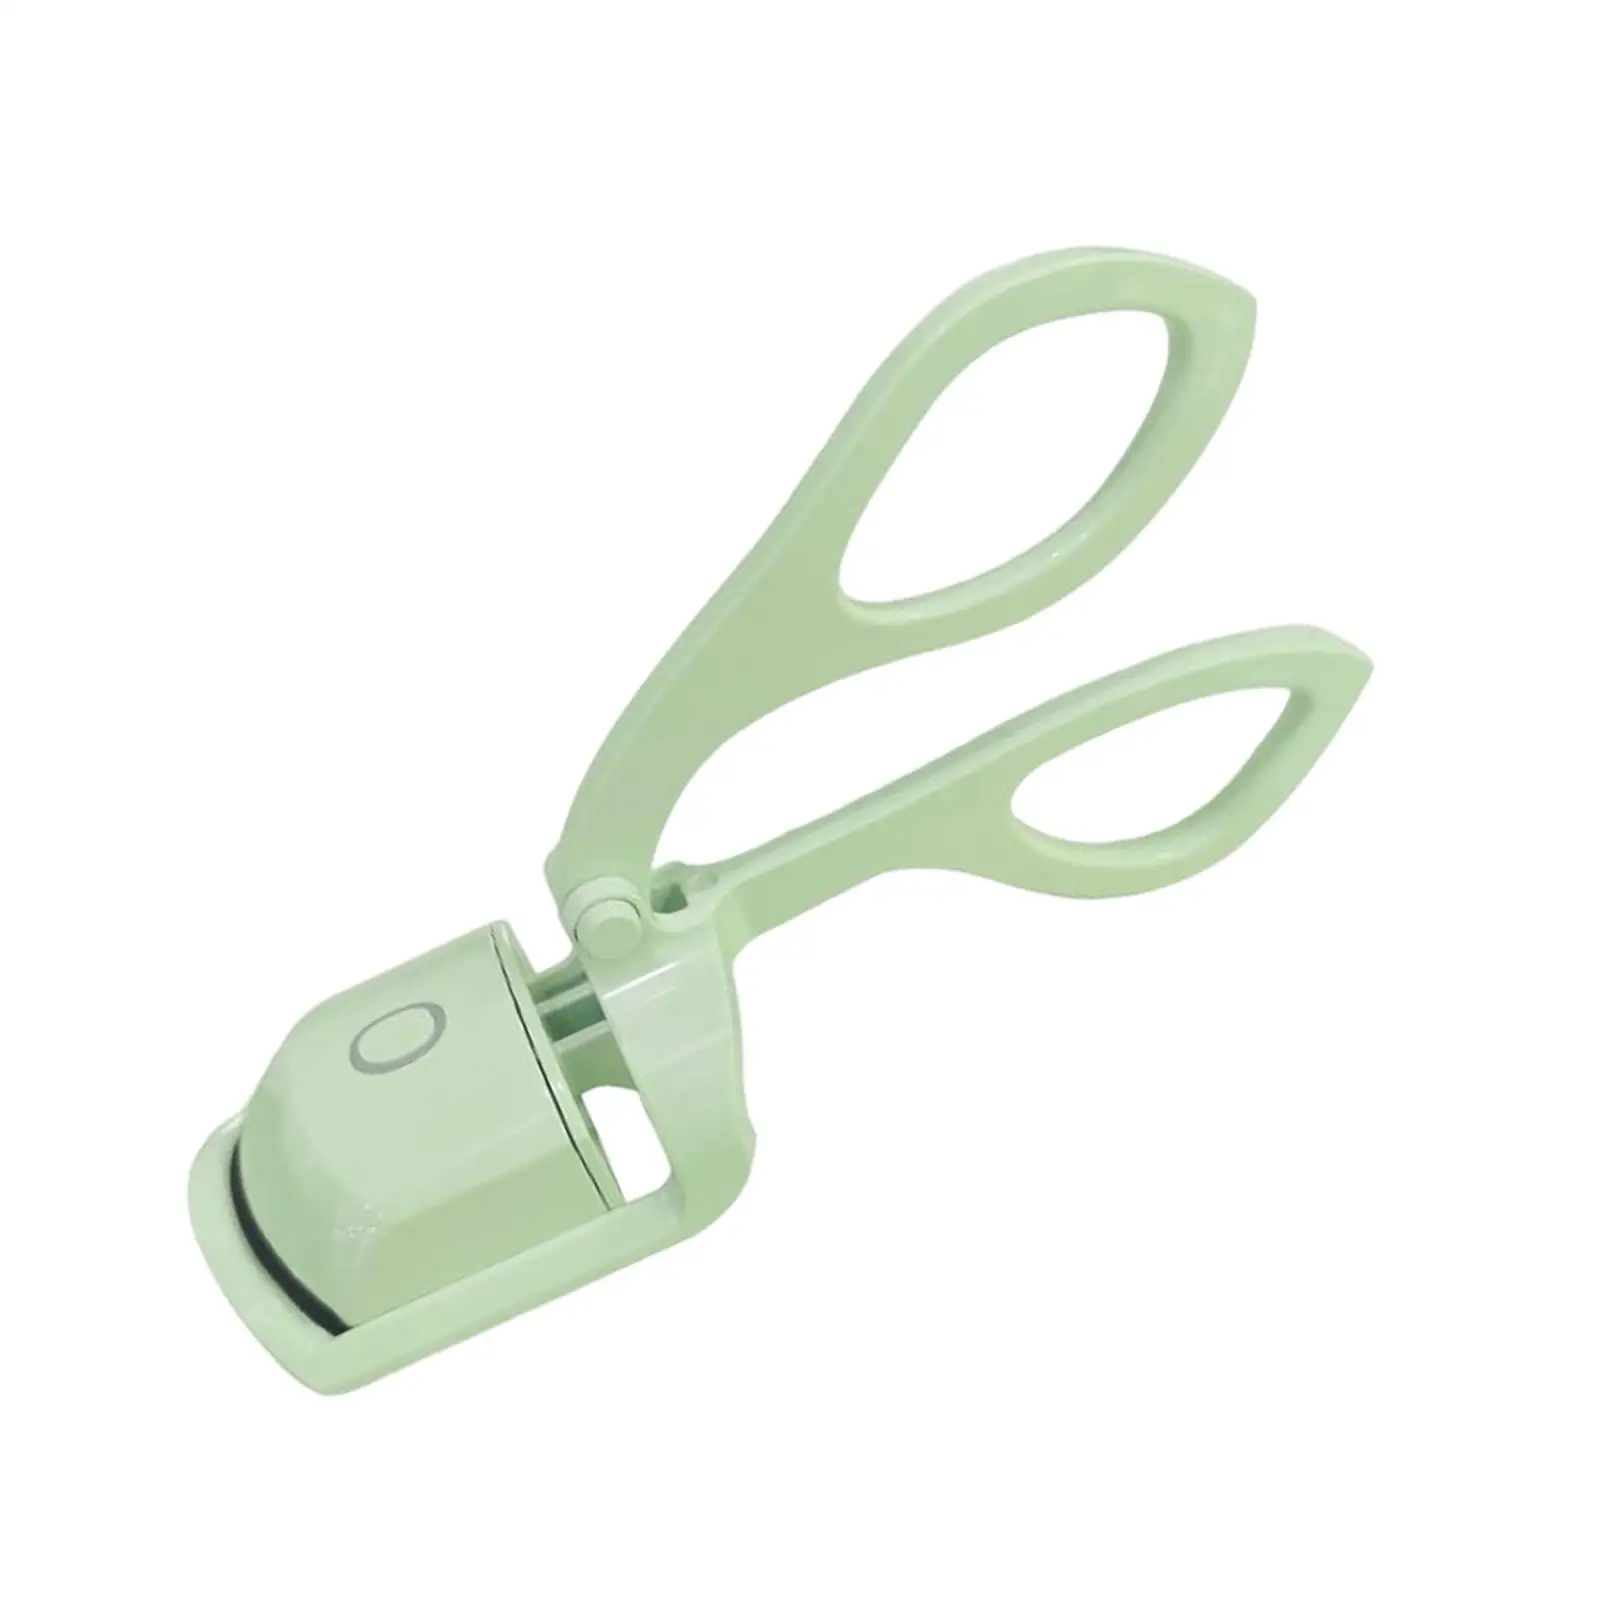 Portable Heated Eyelash Curler Persistent Curl Long & Voluminously Curled eyelash in Seconds USB EyeLash Curling Clip